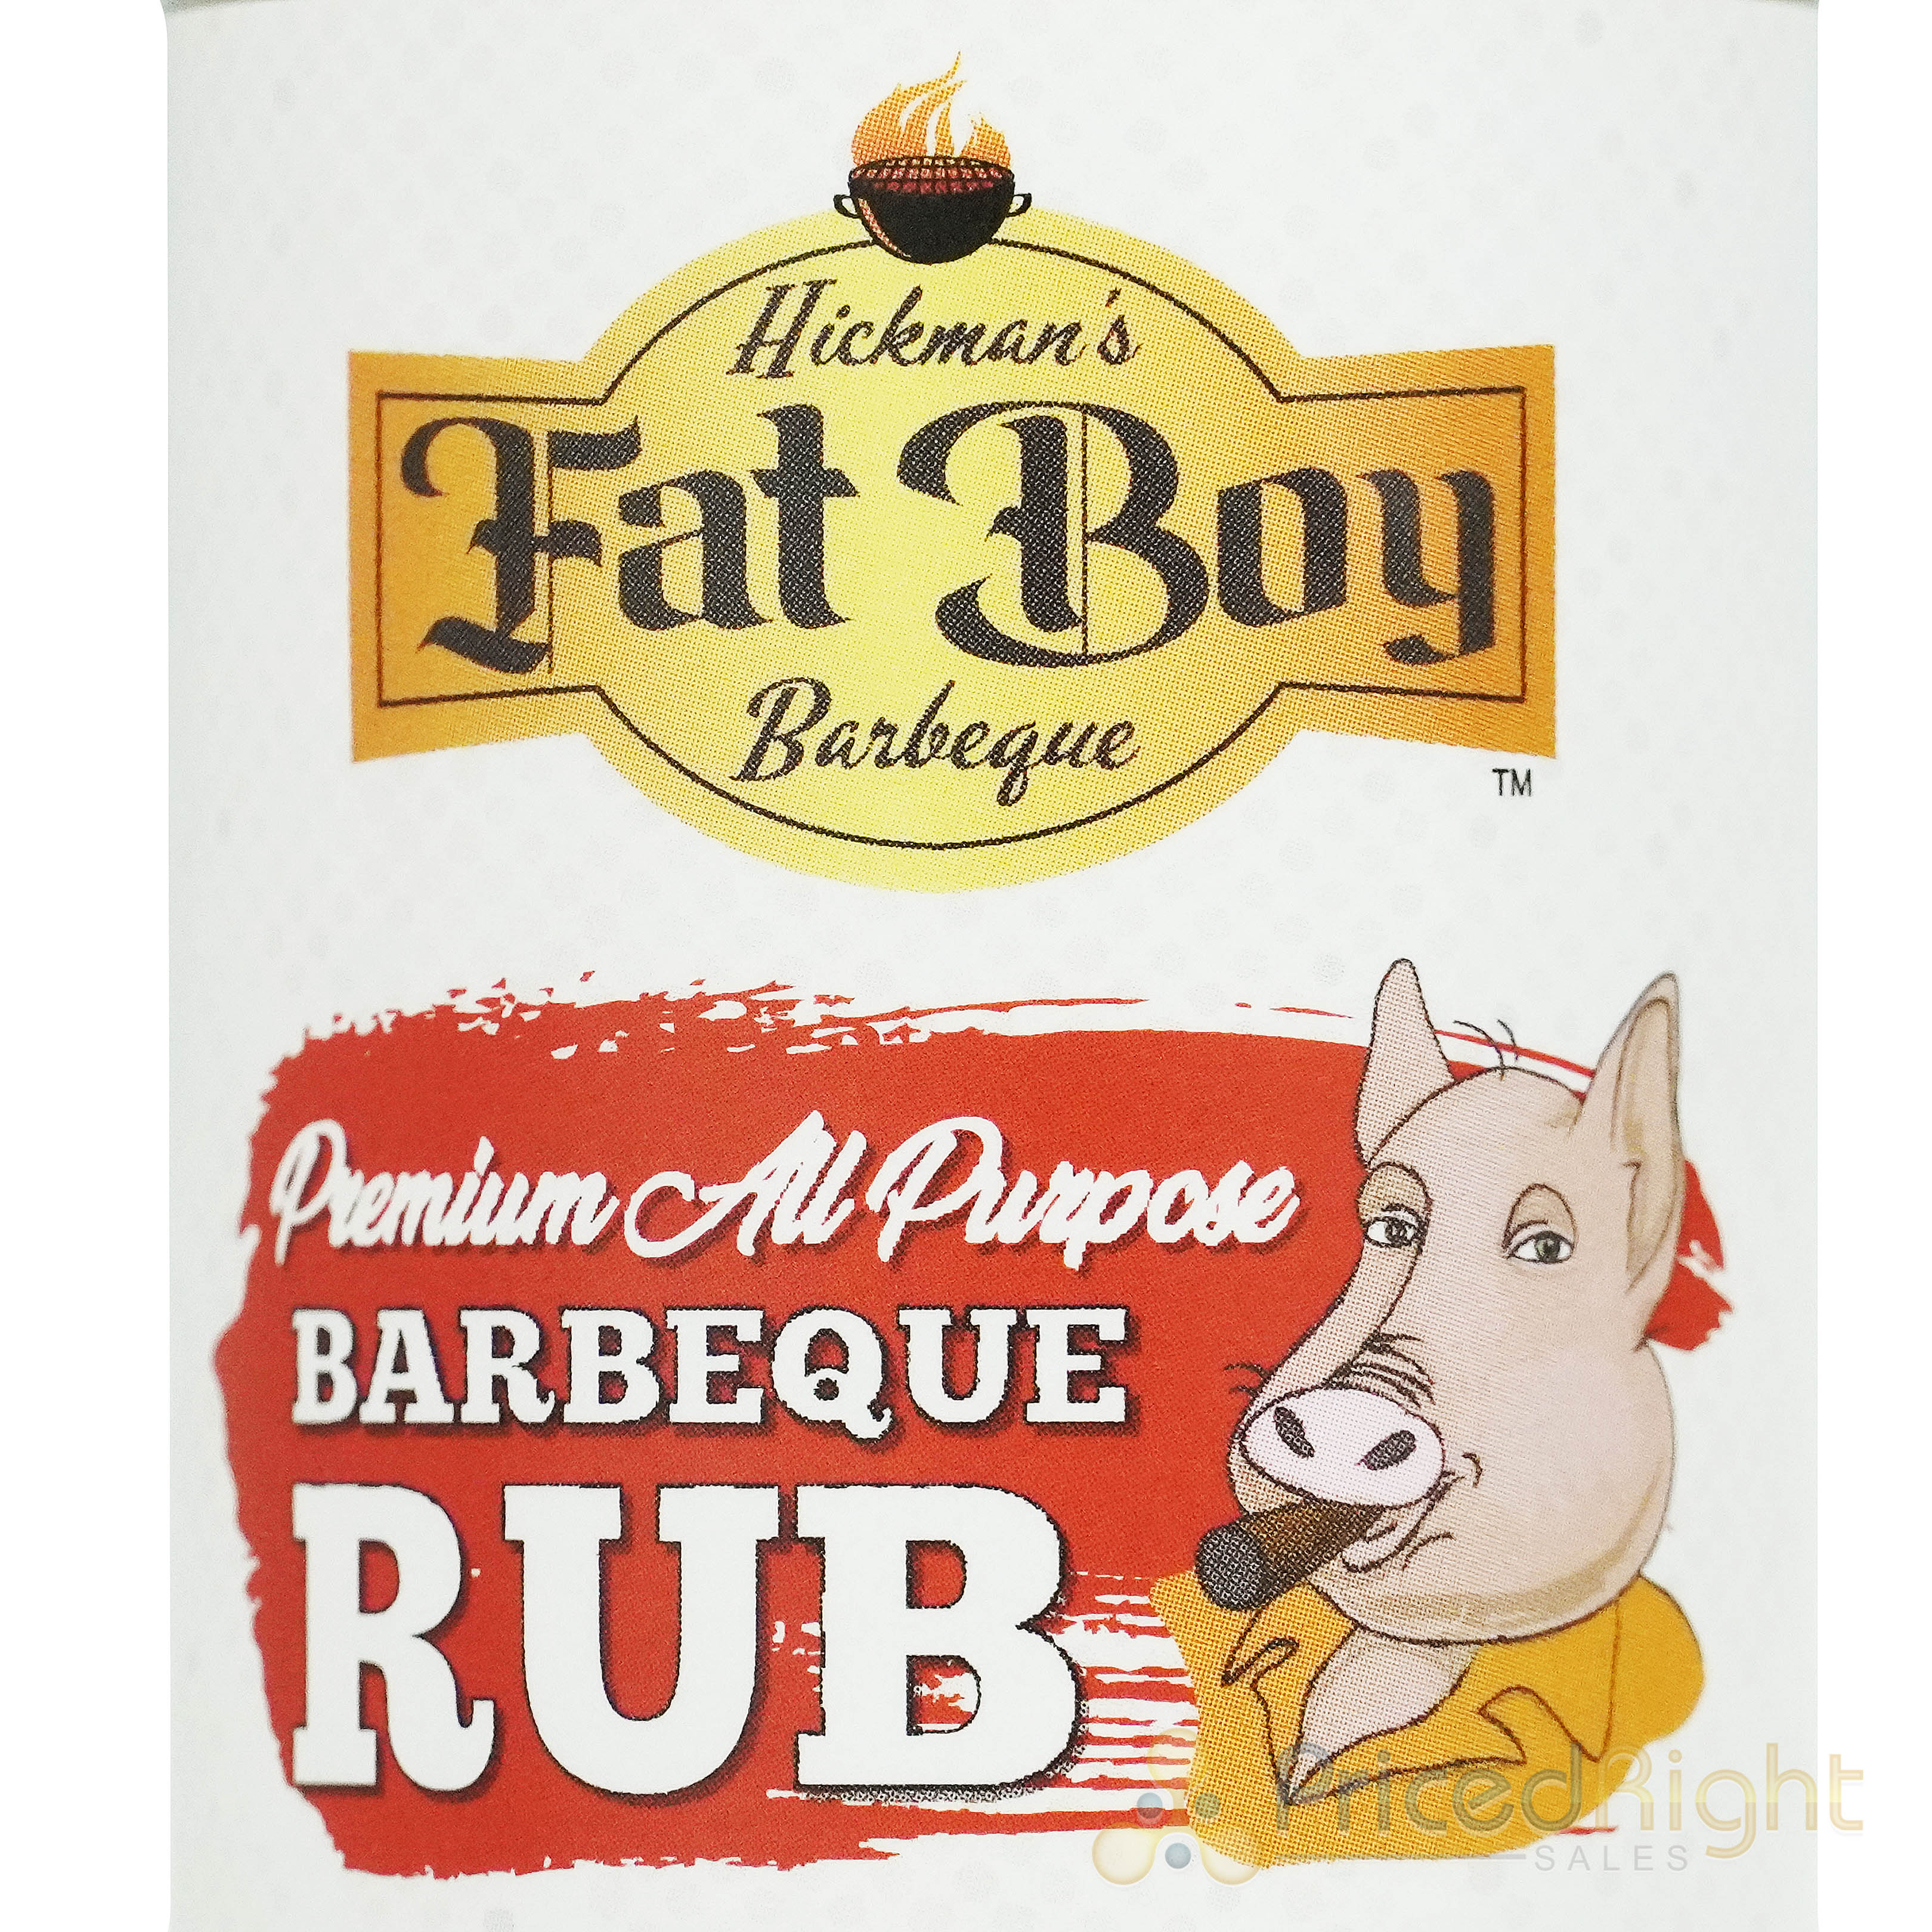 Fat Boy All Natural Premium All Purpose BBQ Rub 4 Oz Bottle Gluten Free 00001